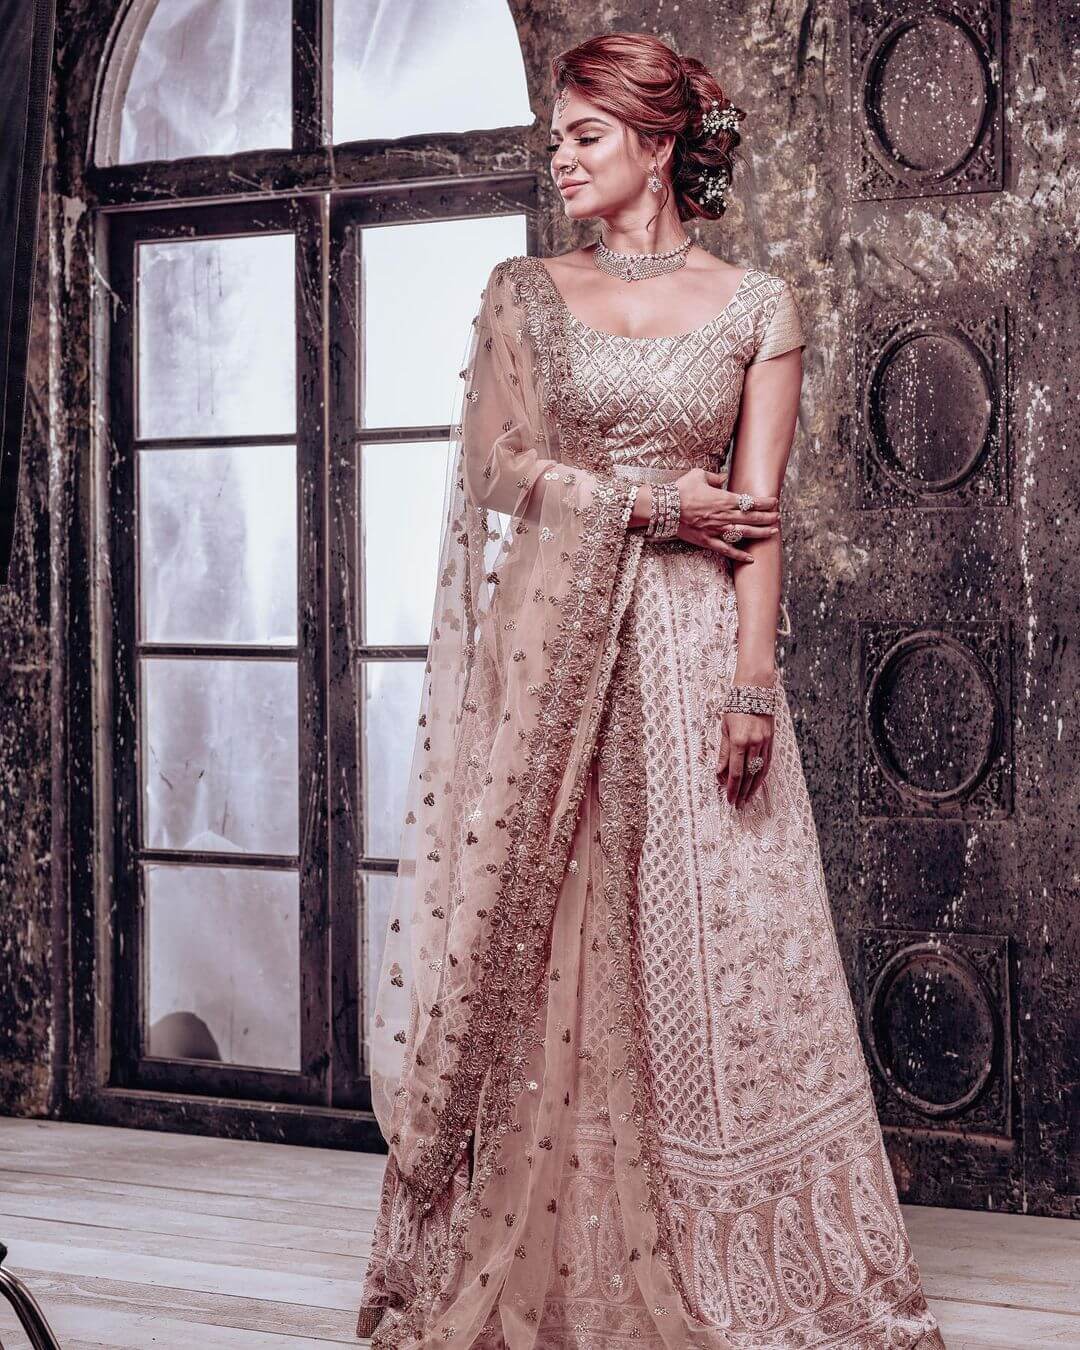 Aashika Goradia Elegant Look In Golden Lehenga Outfit